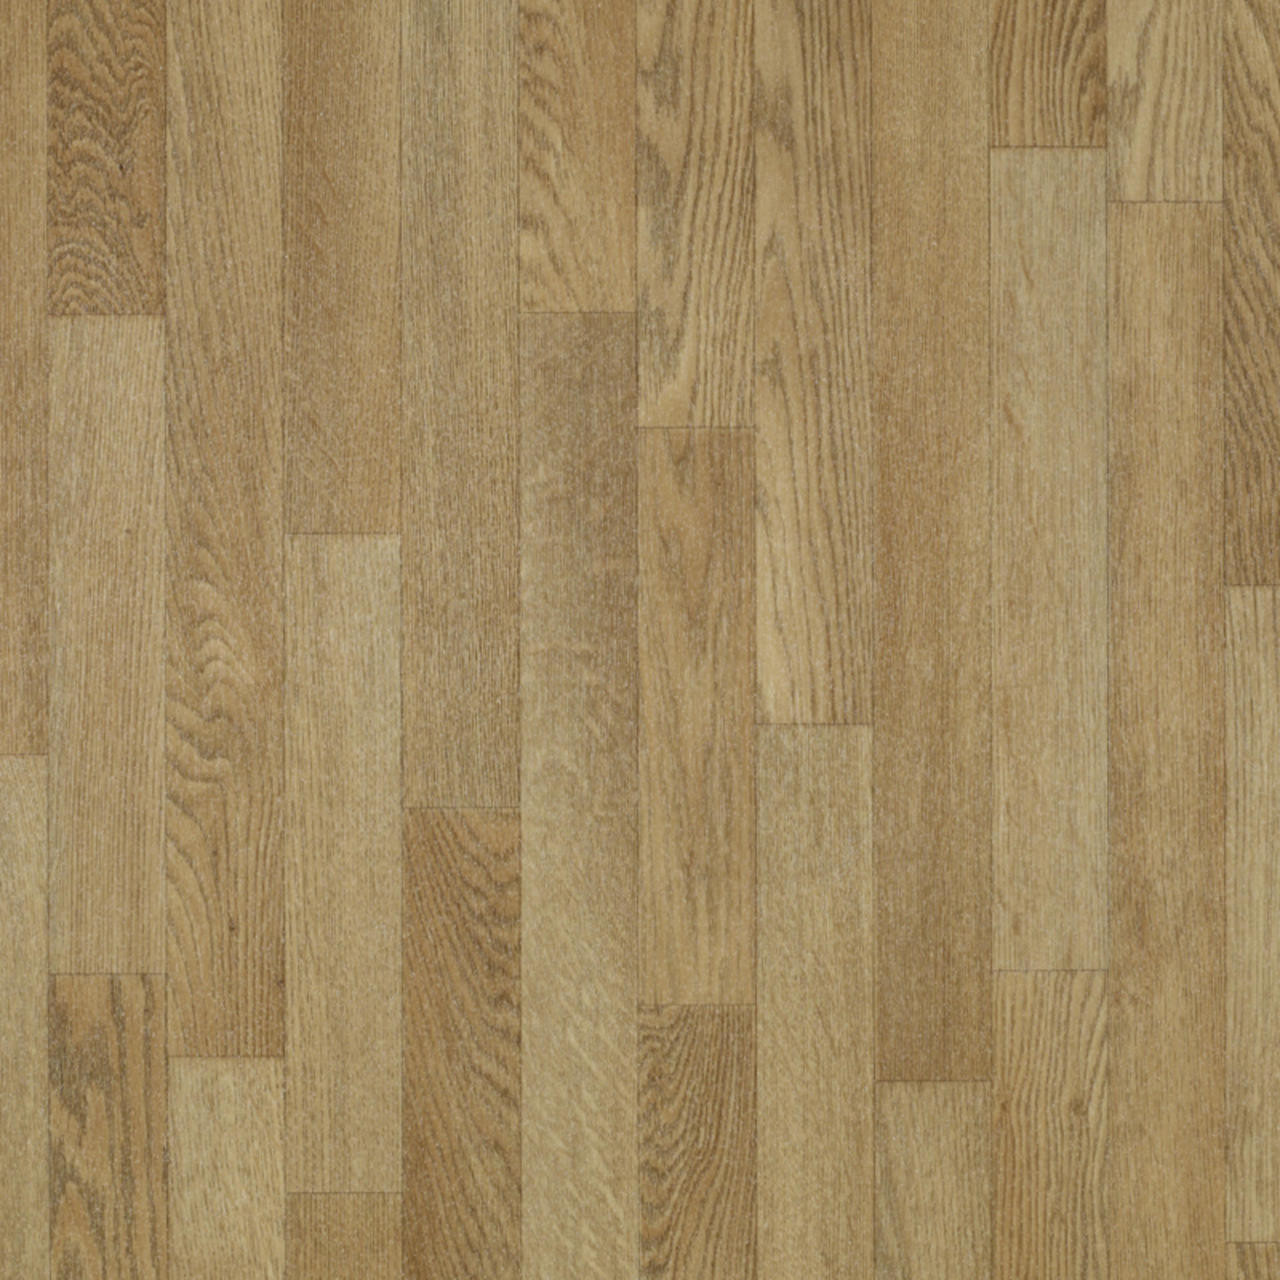 Tarkett Safetred Wood Trend Oak Natural Floormart Co Uk